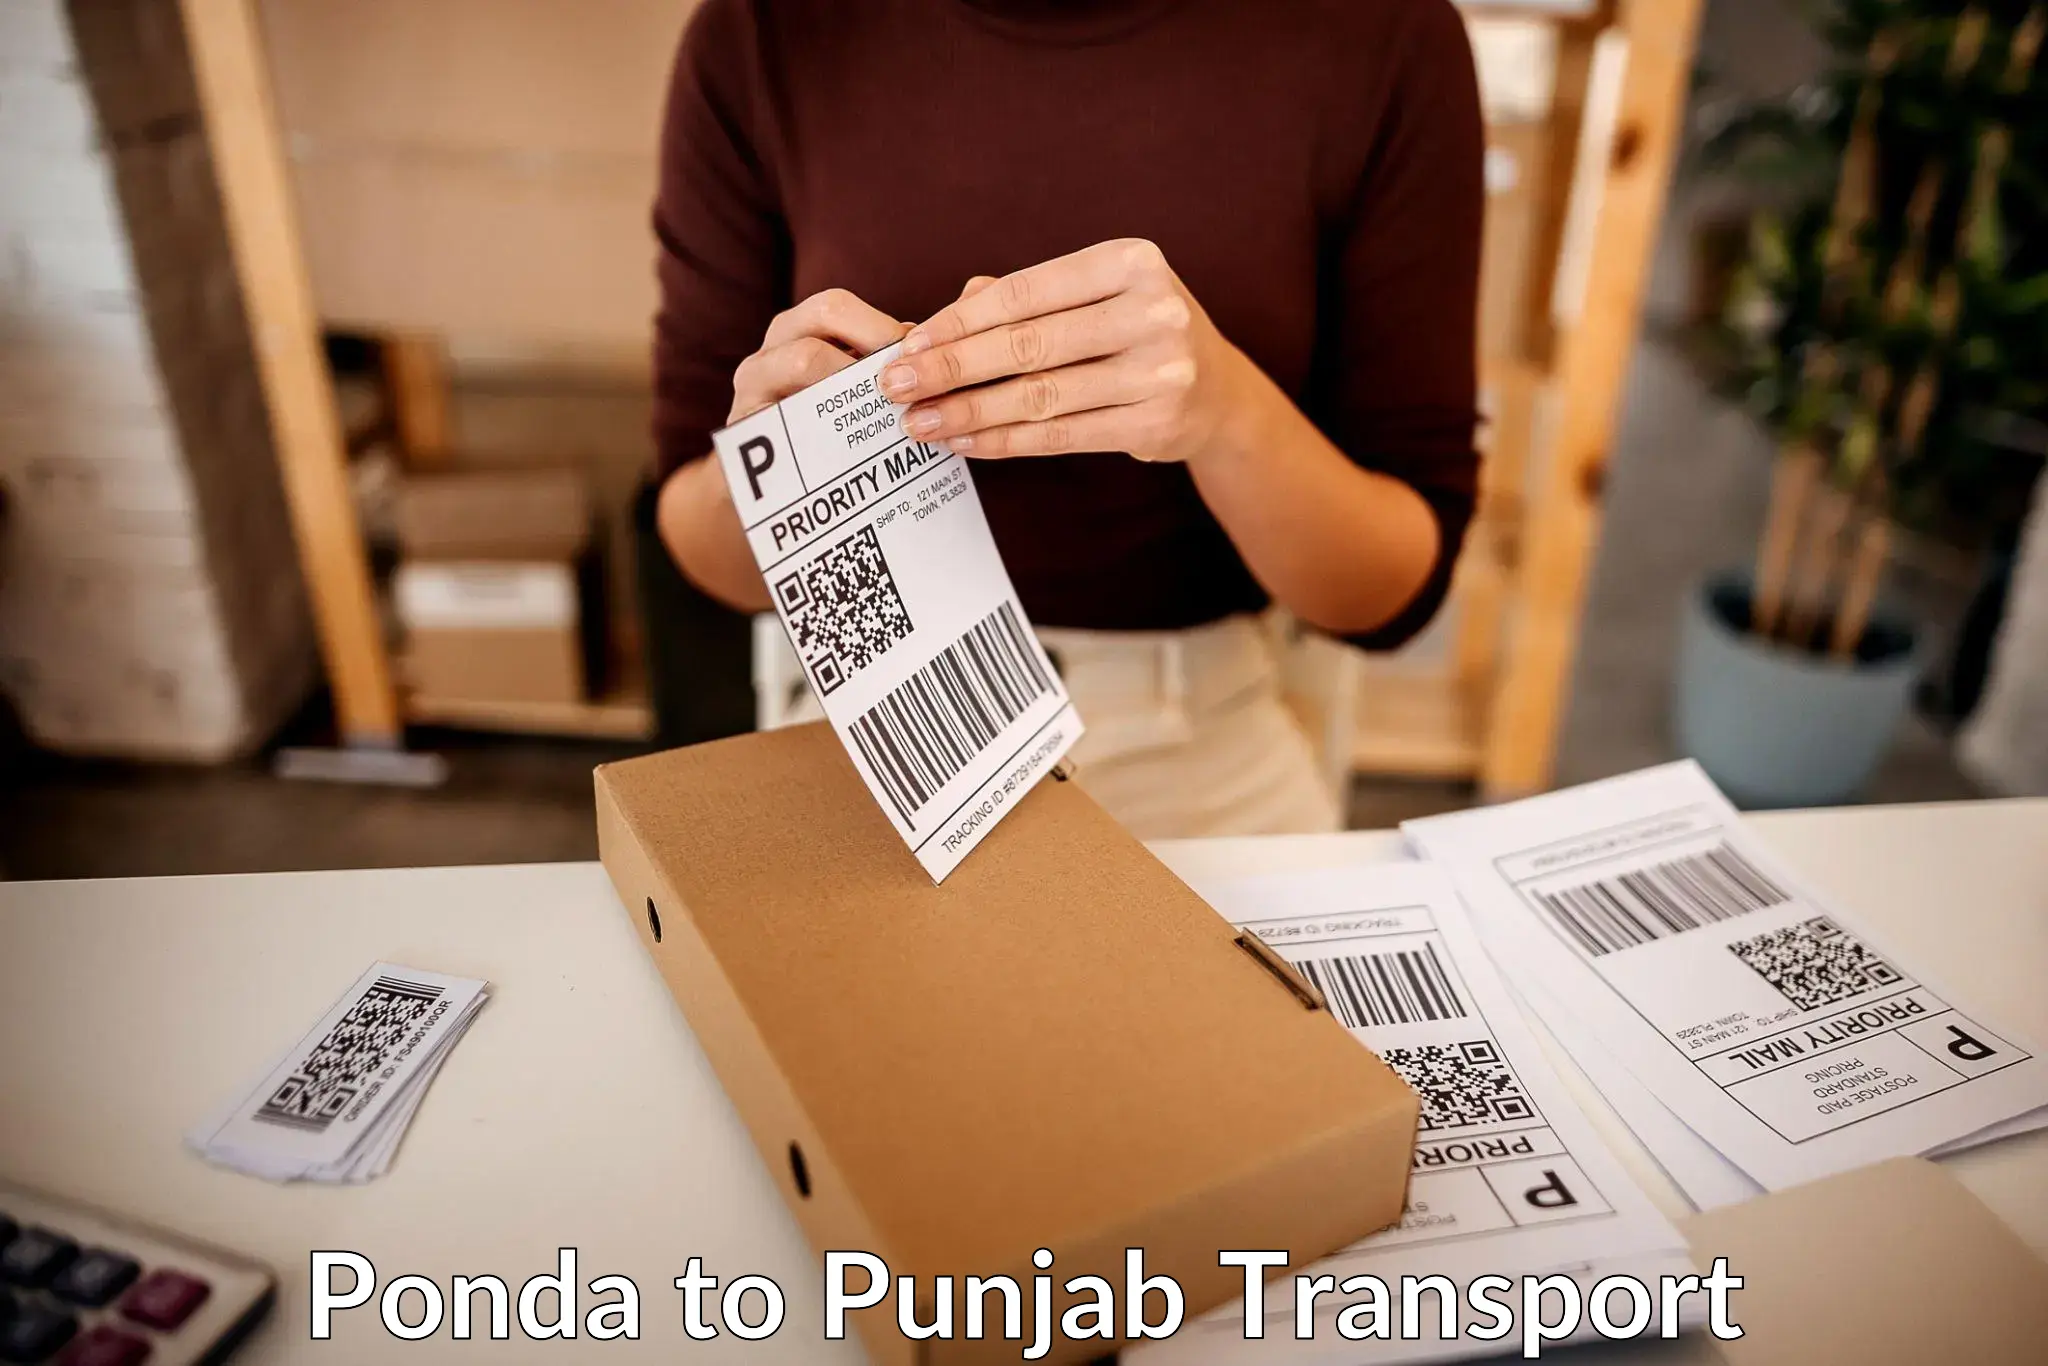 Cycle transportation service Ponda to Amritsar